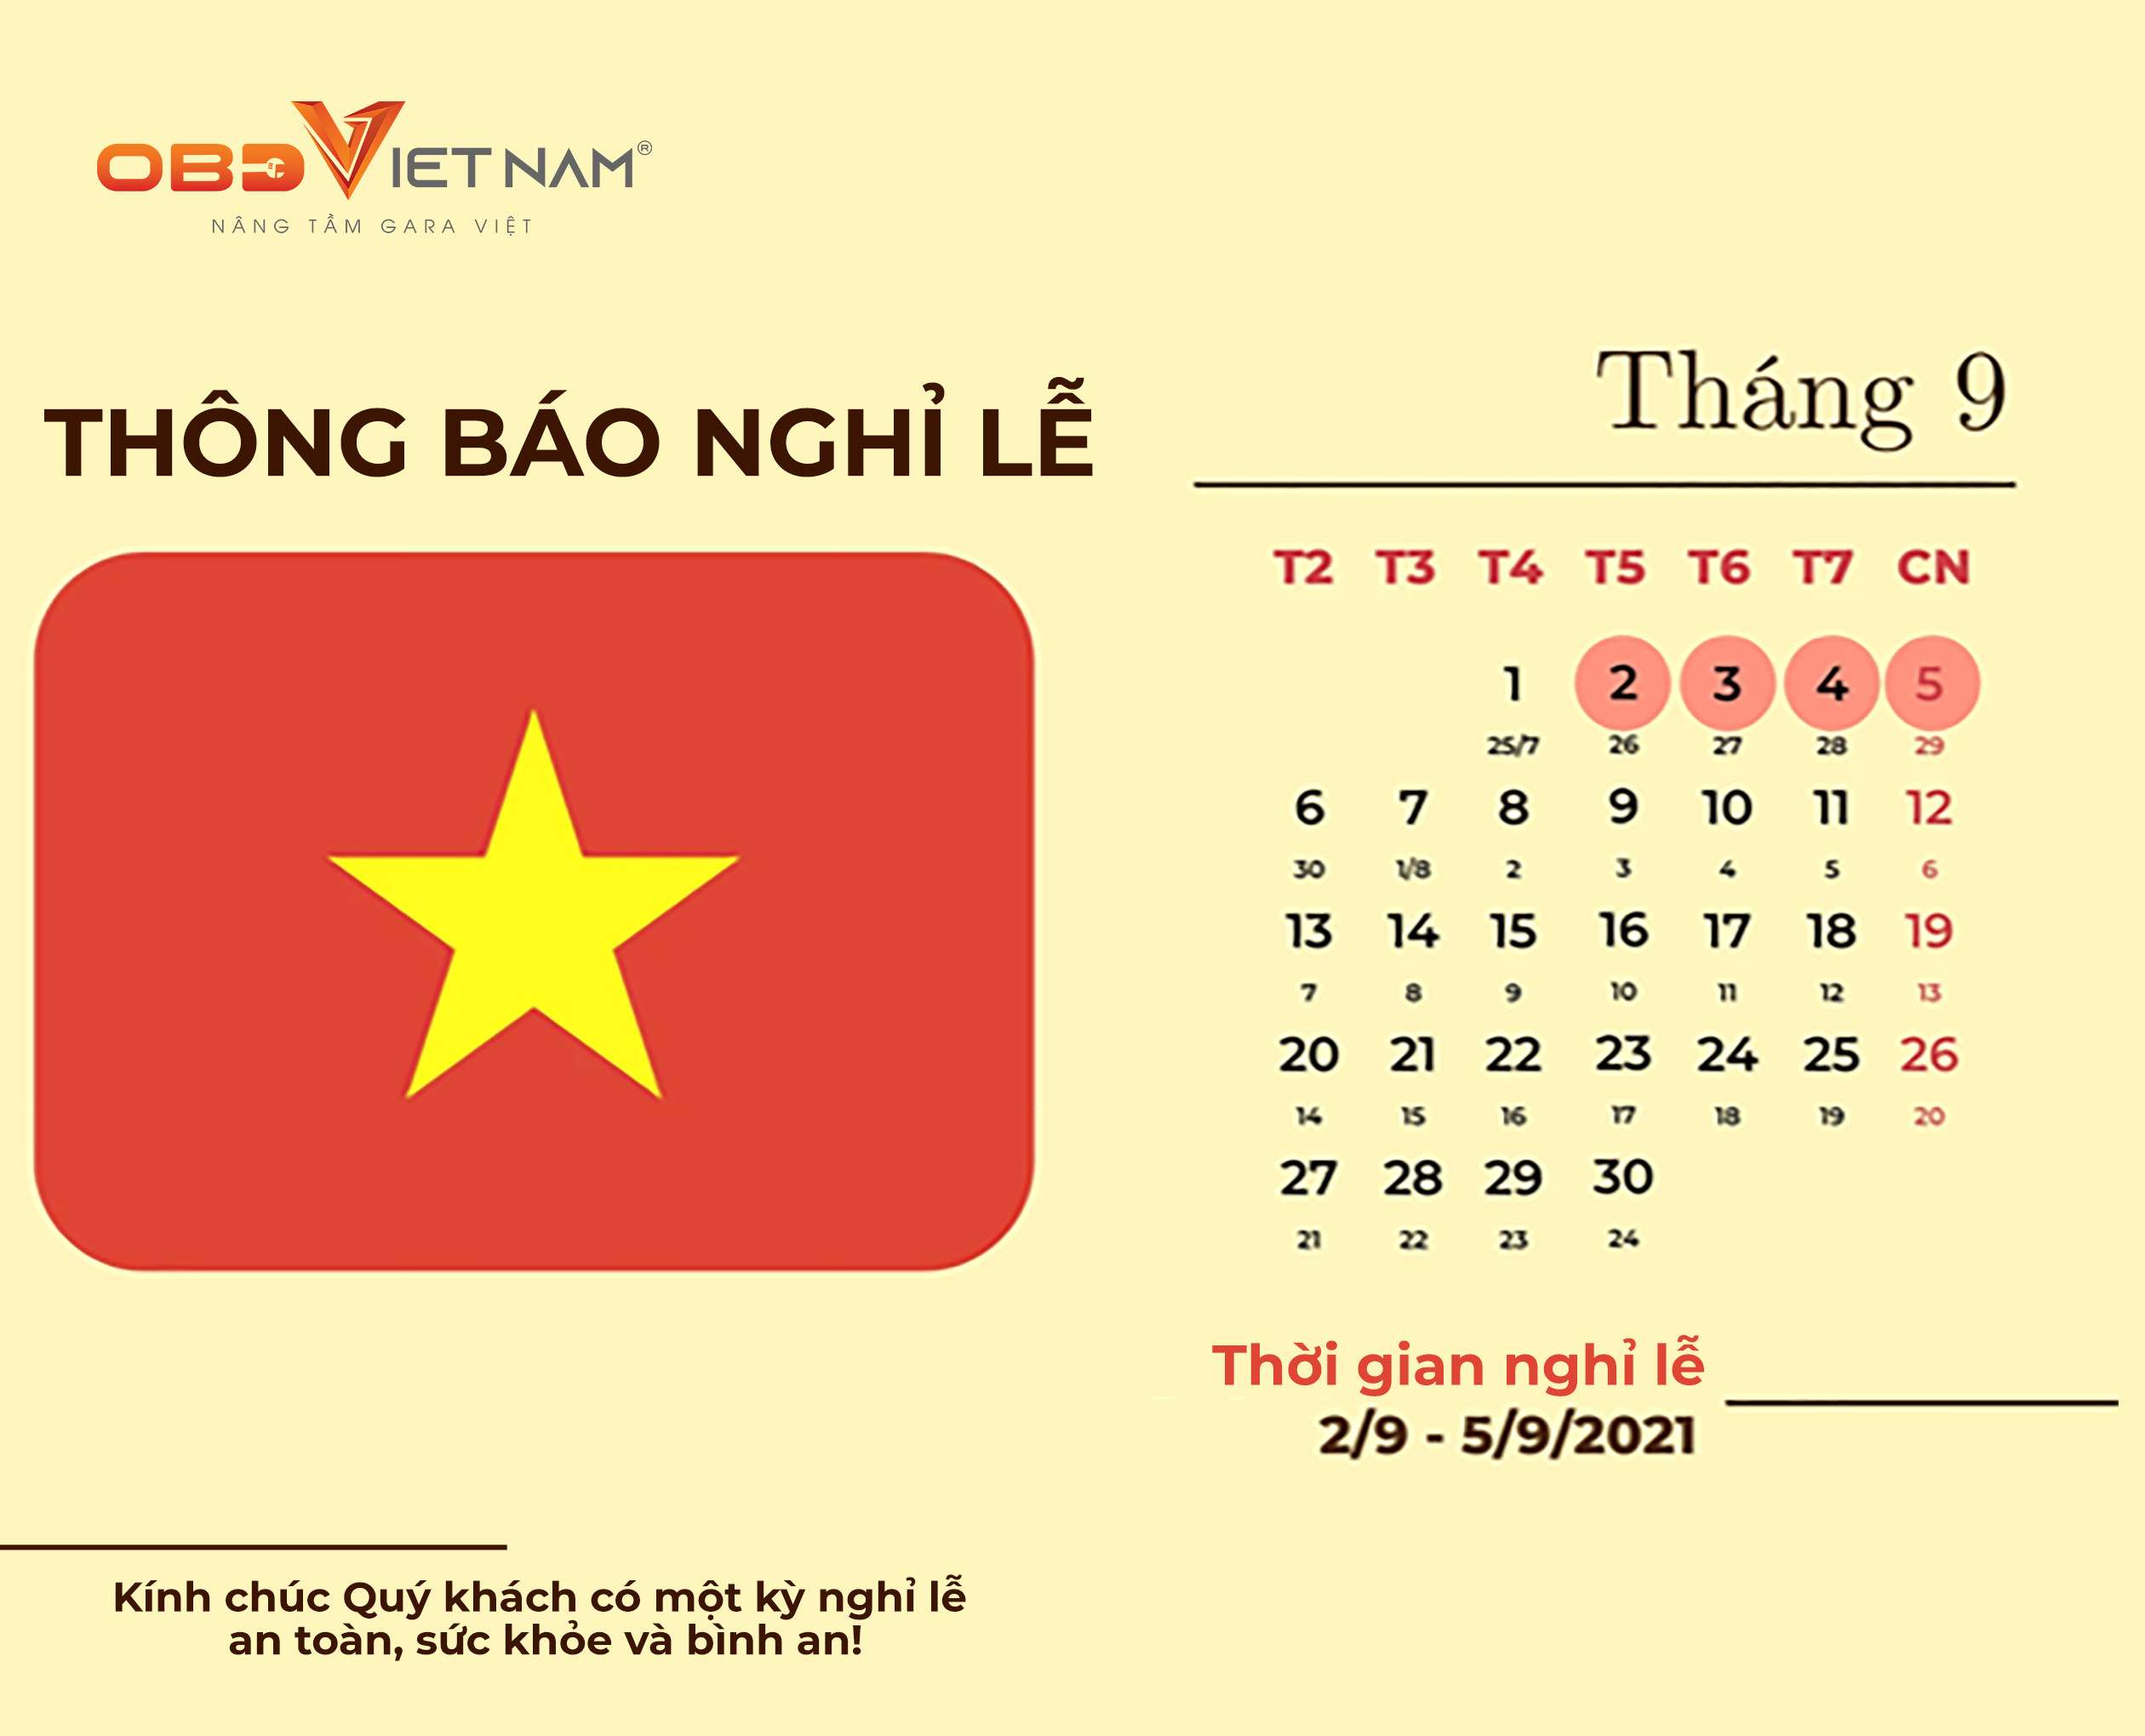 obd-viet-nam-thong-bao-nghi-le-2-thang-9-nam-2021